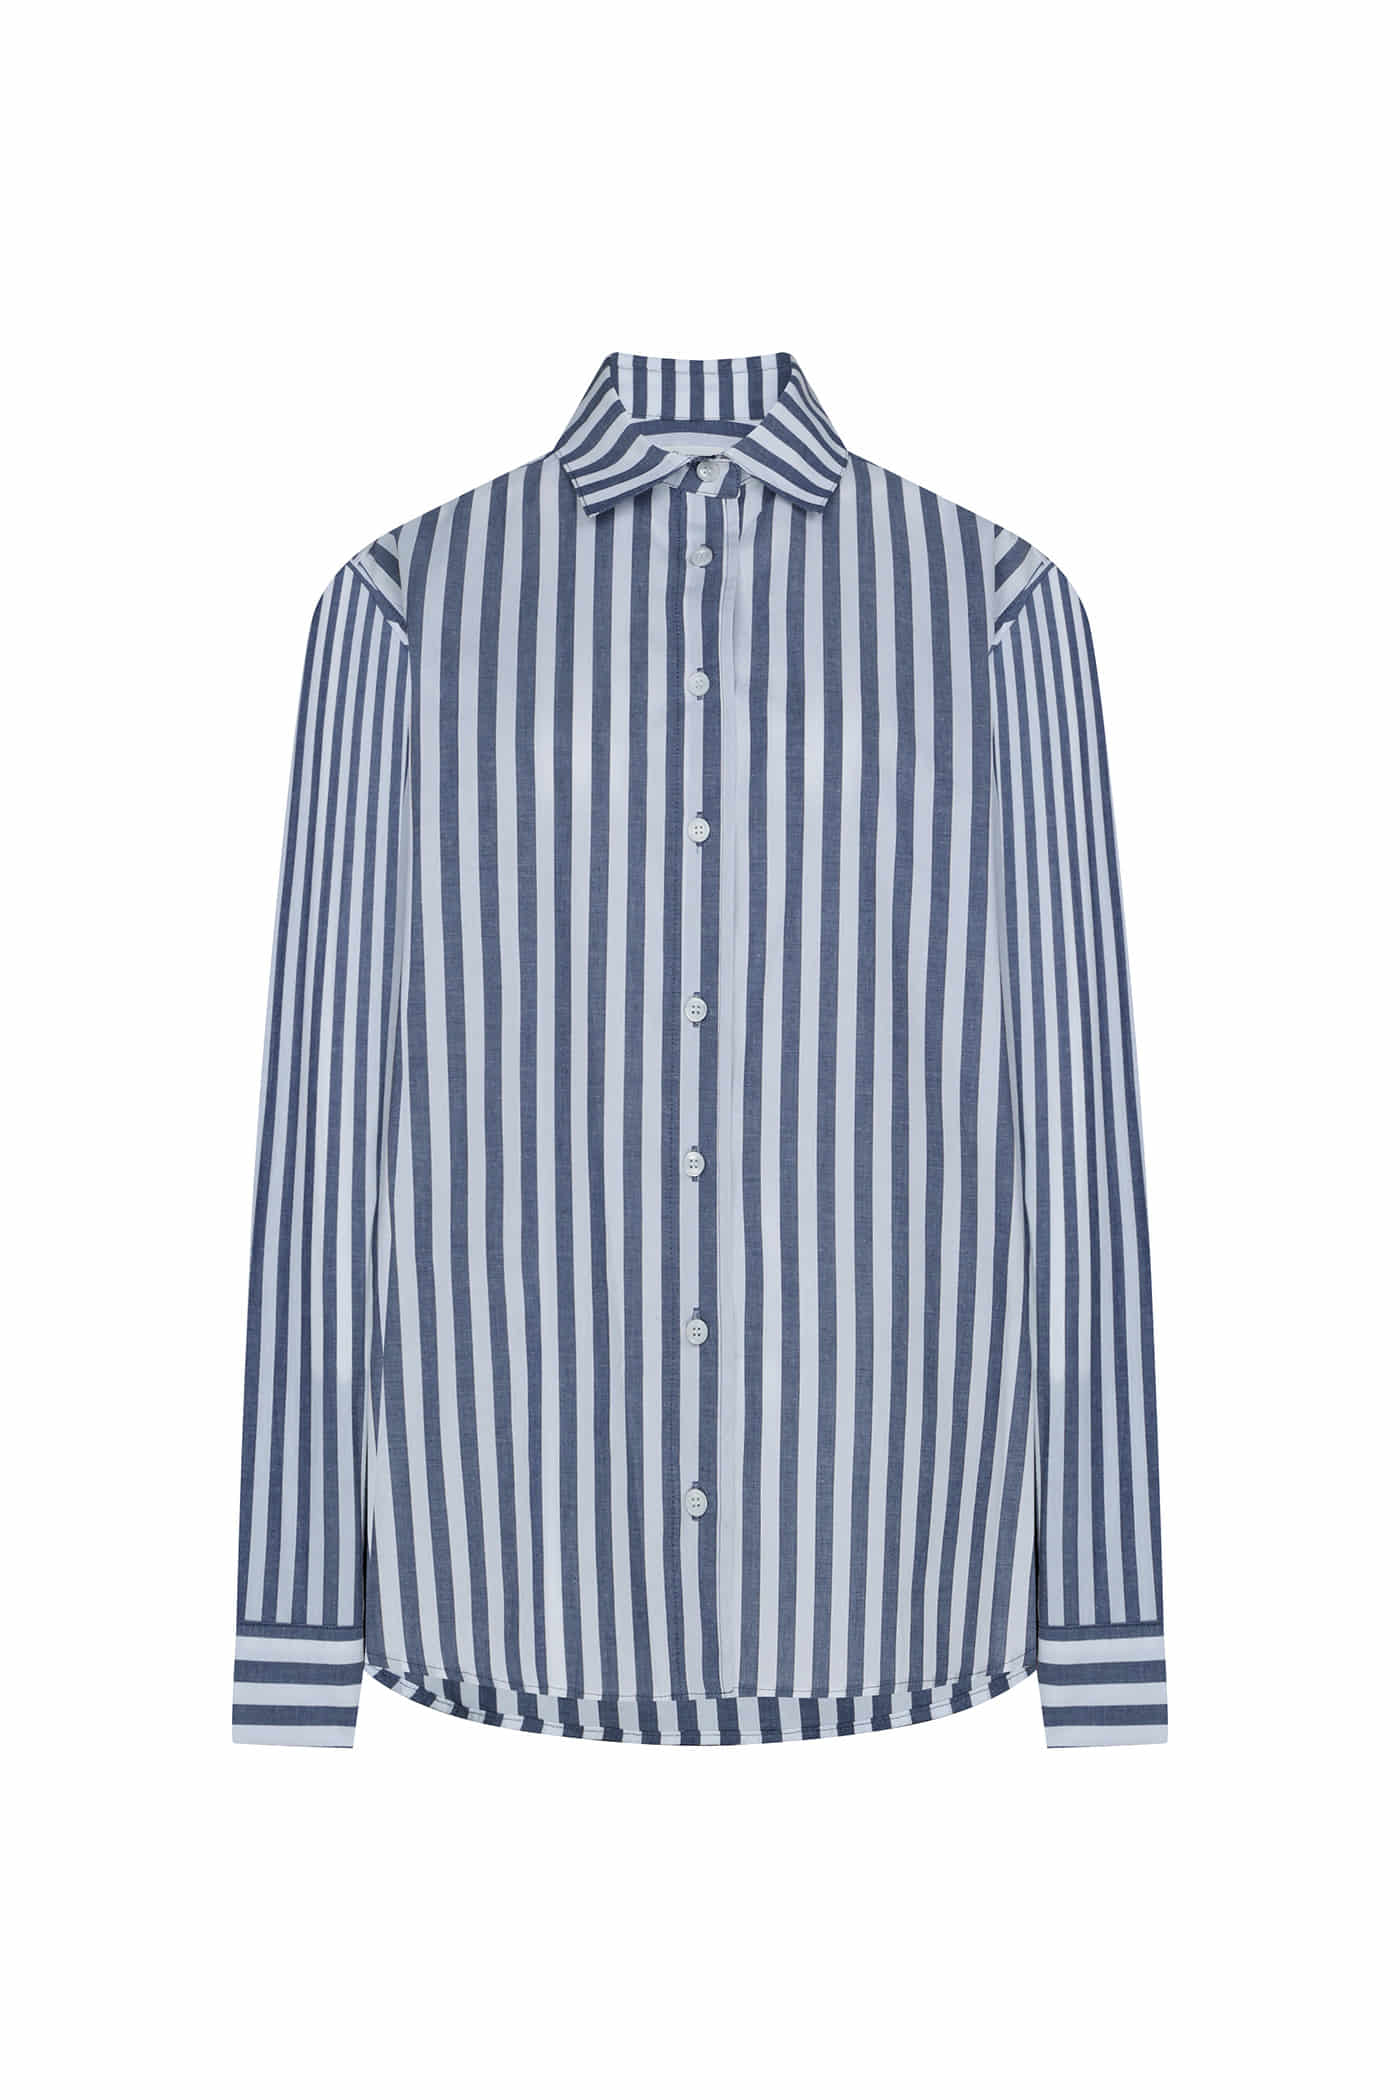 Cotton Stripe Shirt-Navy